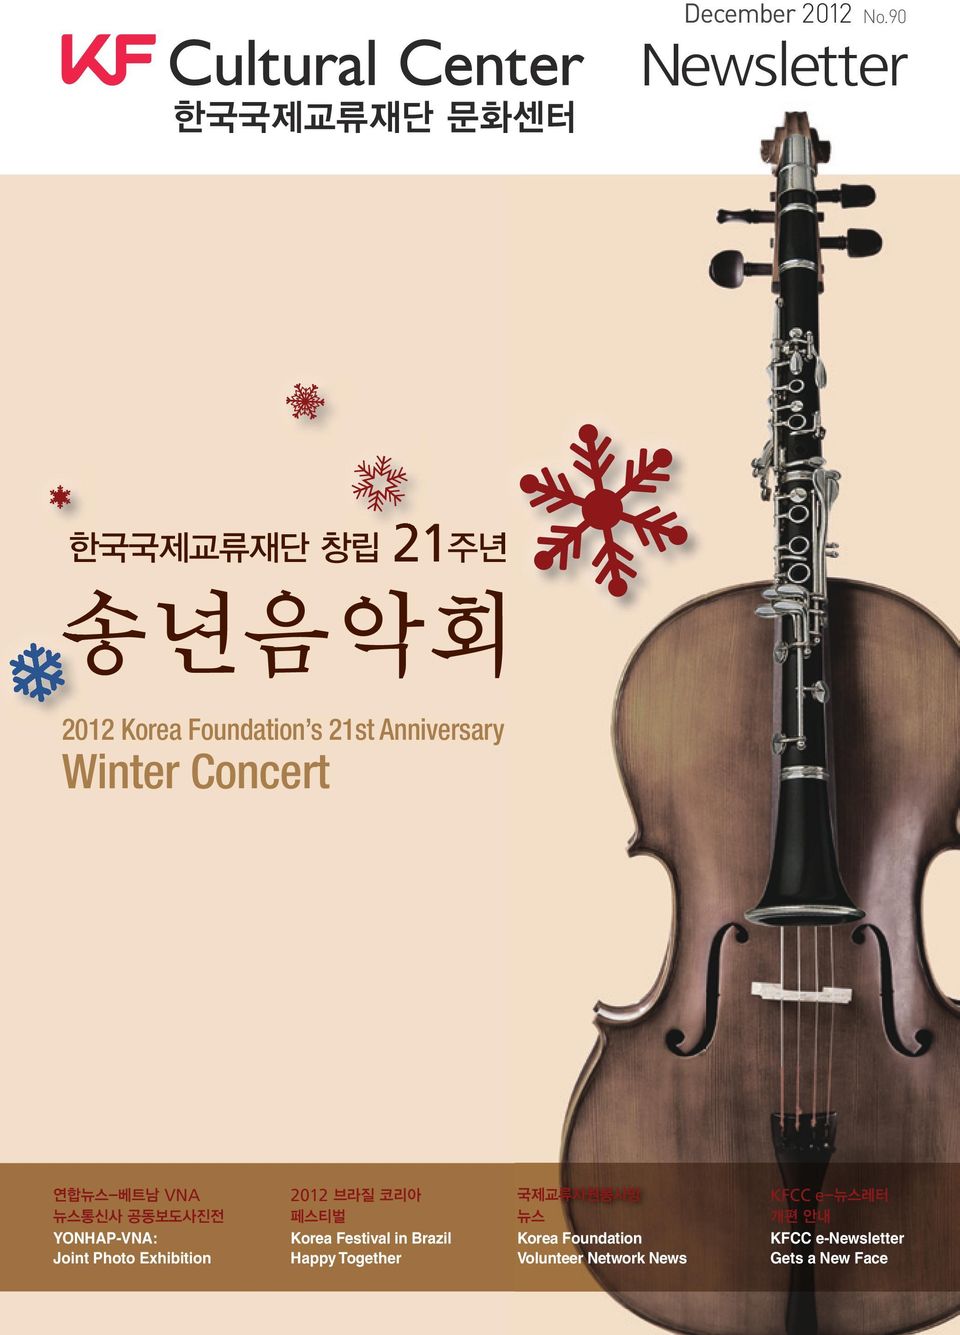 Winter Concert VNA YONHAP-VNA: Joint Photo Exhibition 2012 Korea